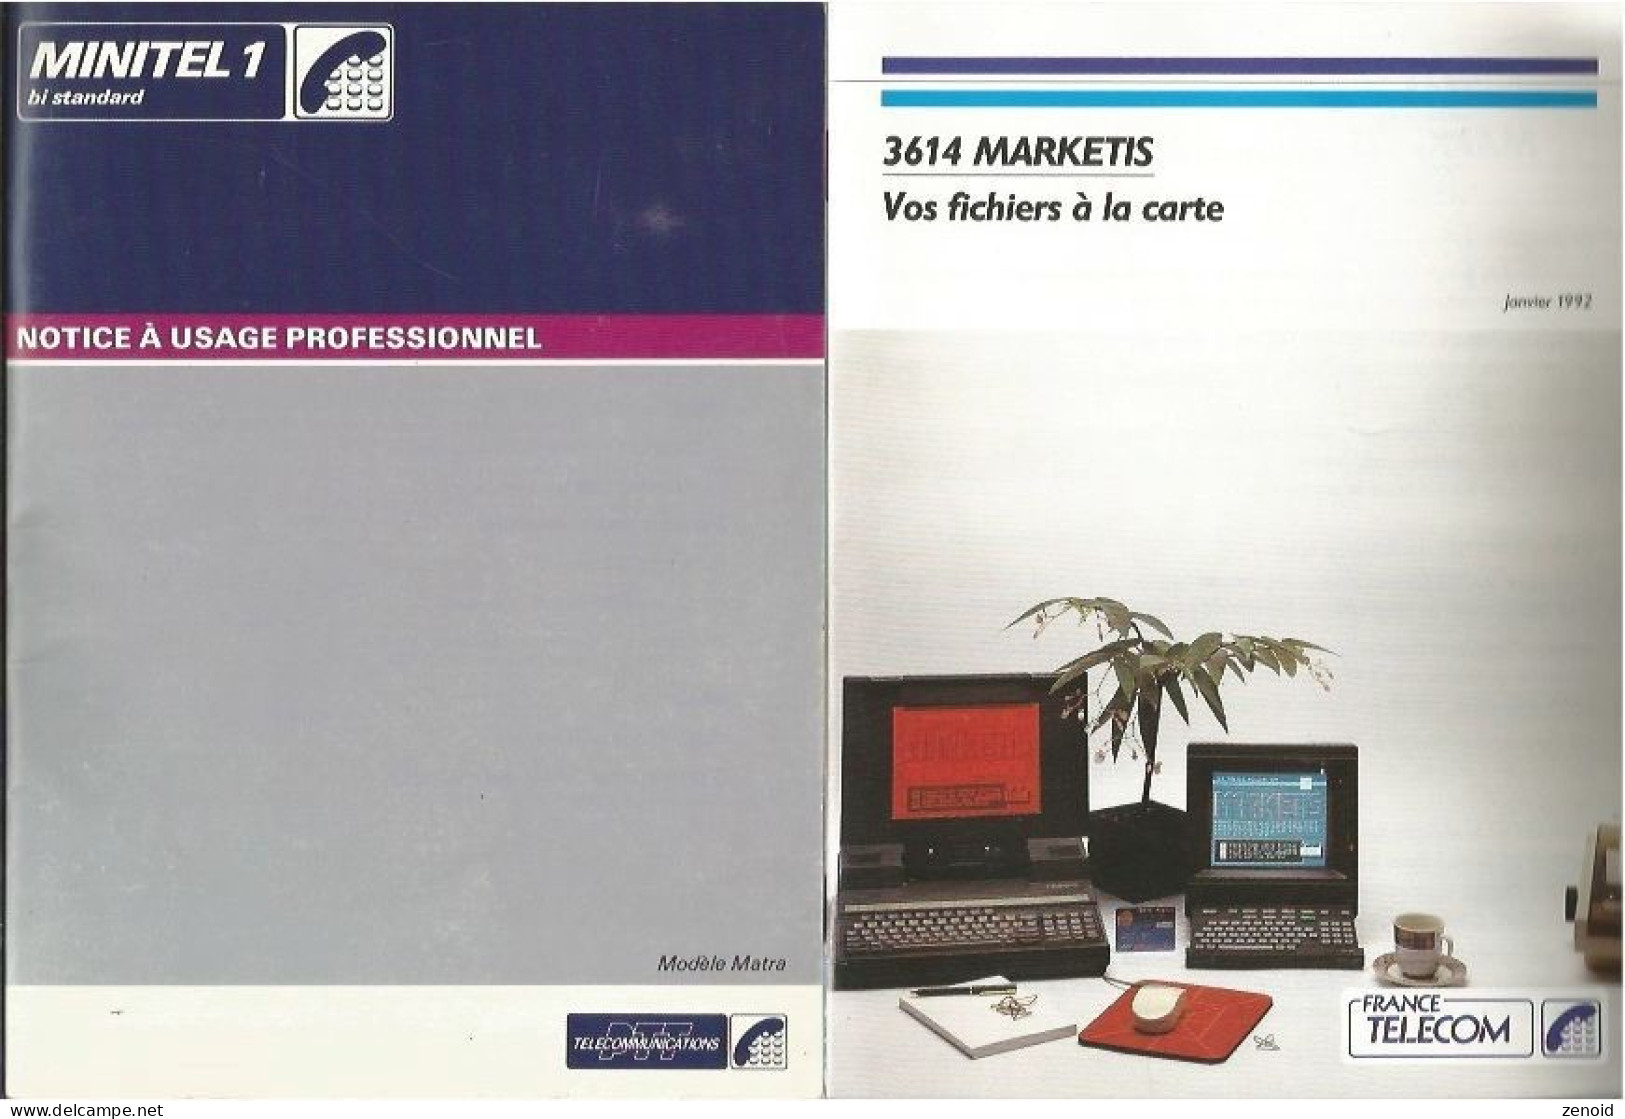 Envoi ,Les Pages Minitel 1995 + Livret "Minitel 1 - Telefontechnik